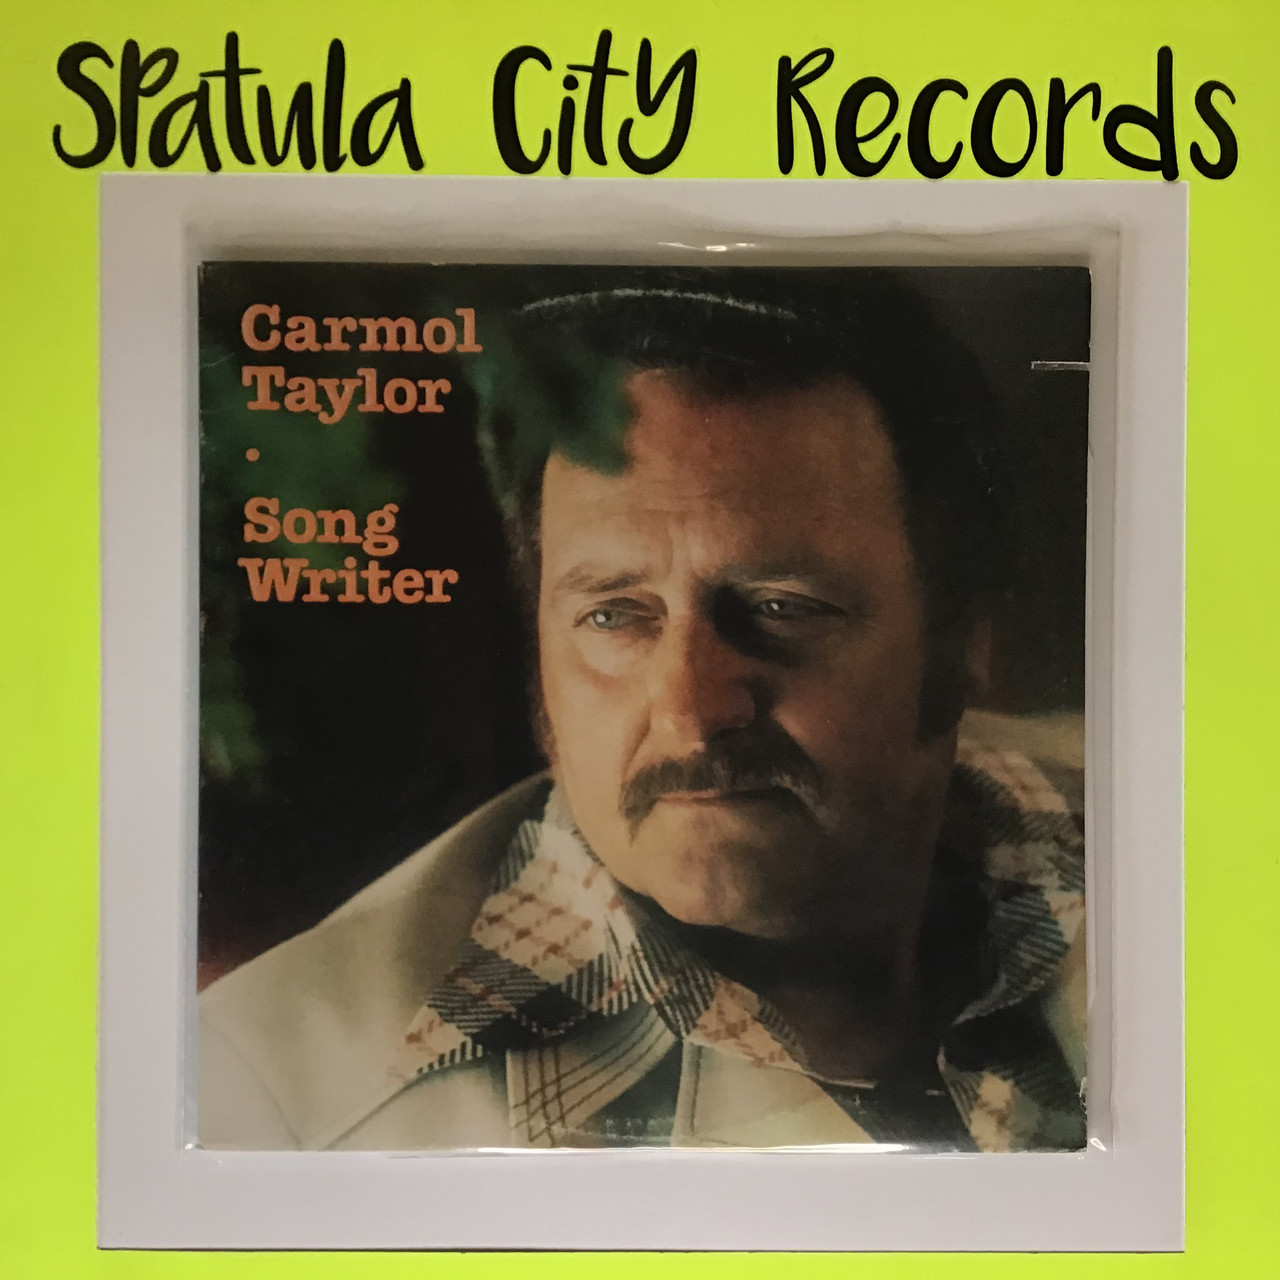 Carmol Taylor - Song Writer - vinyl record LP